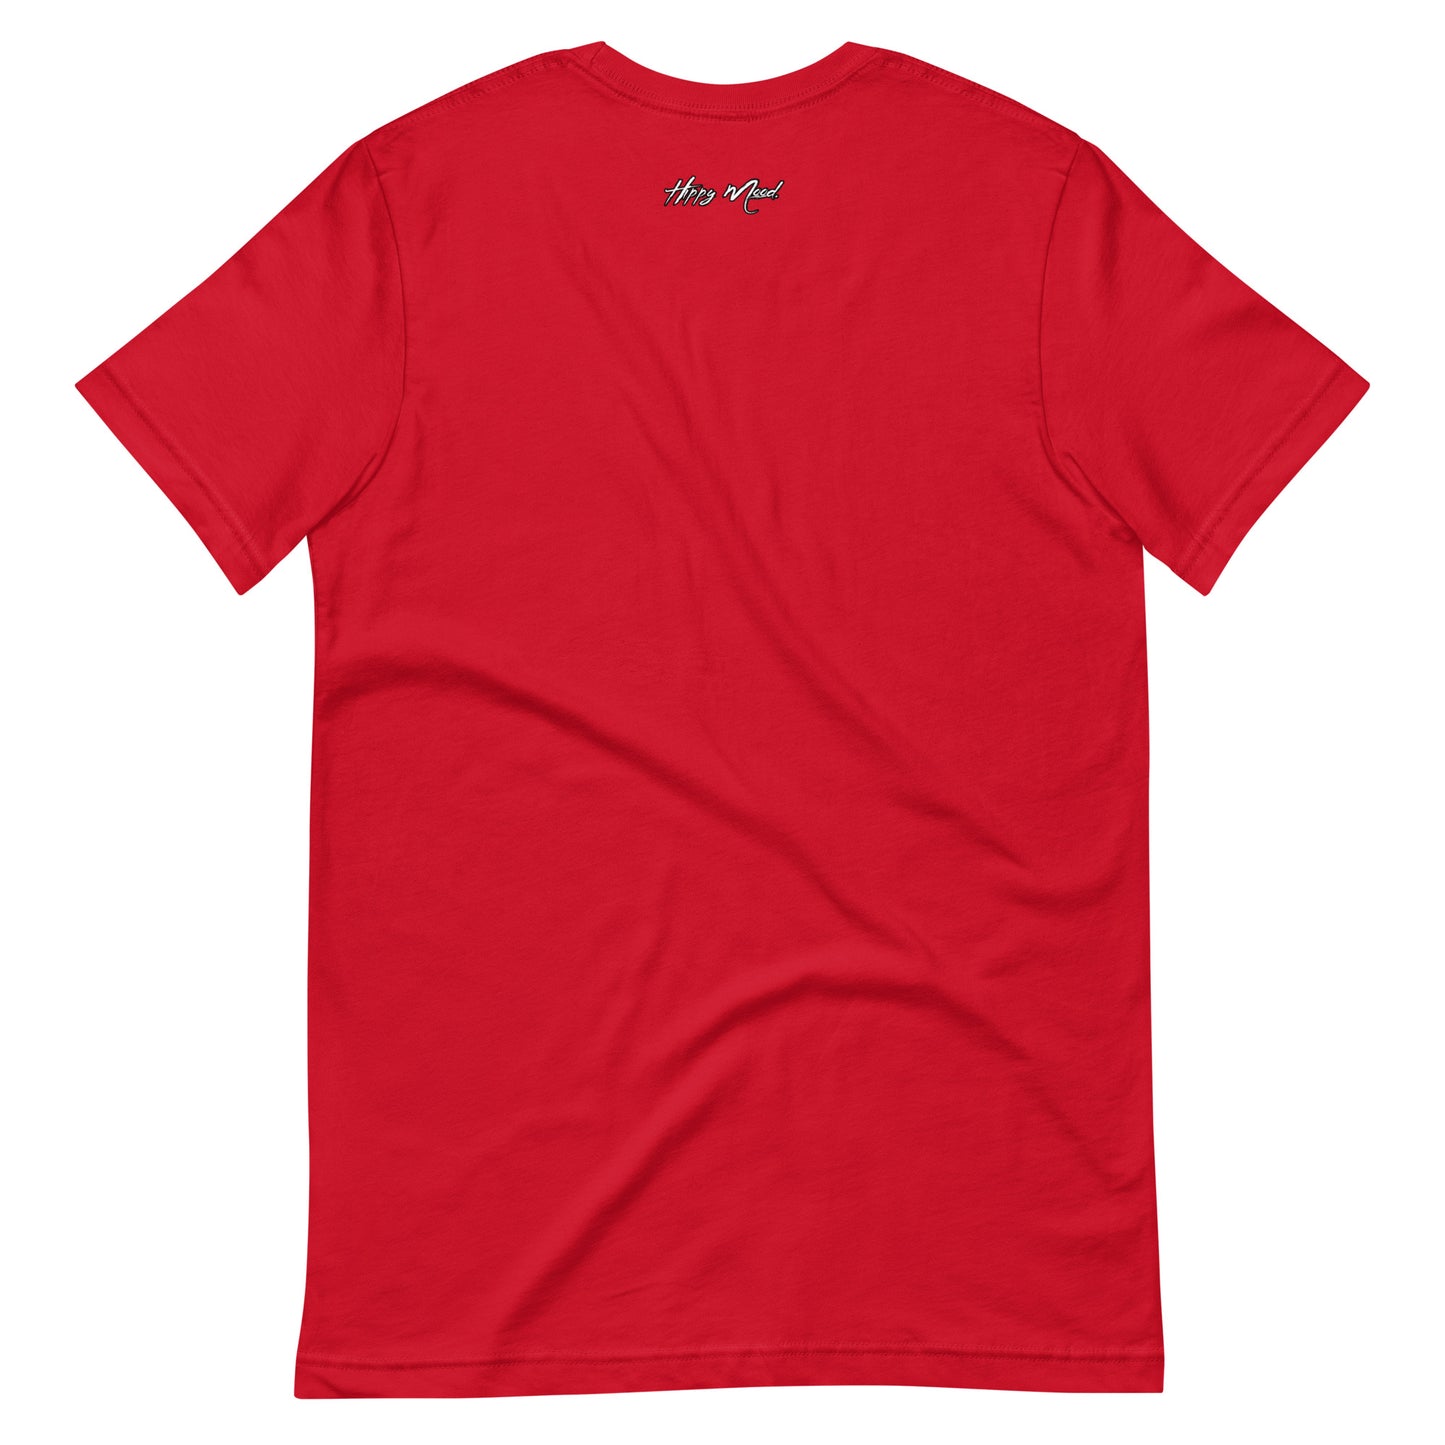 Hippy Mood California | Unisex t-shirt